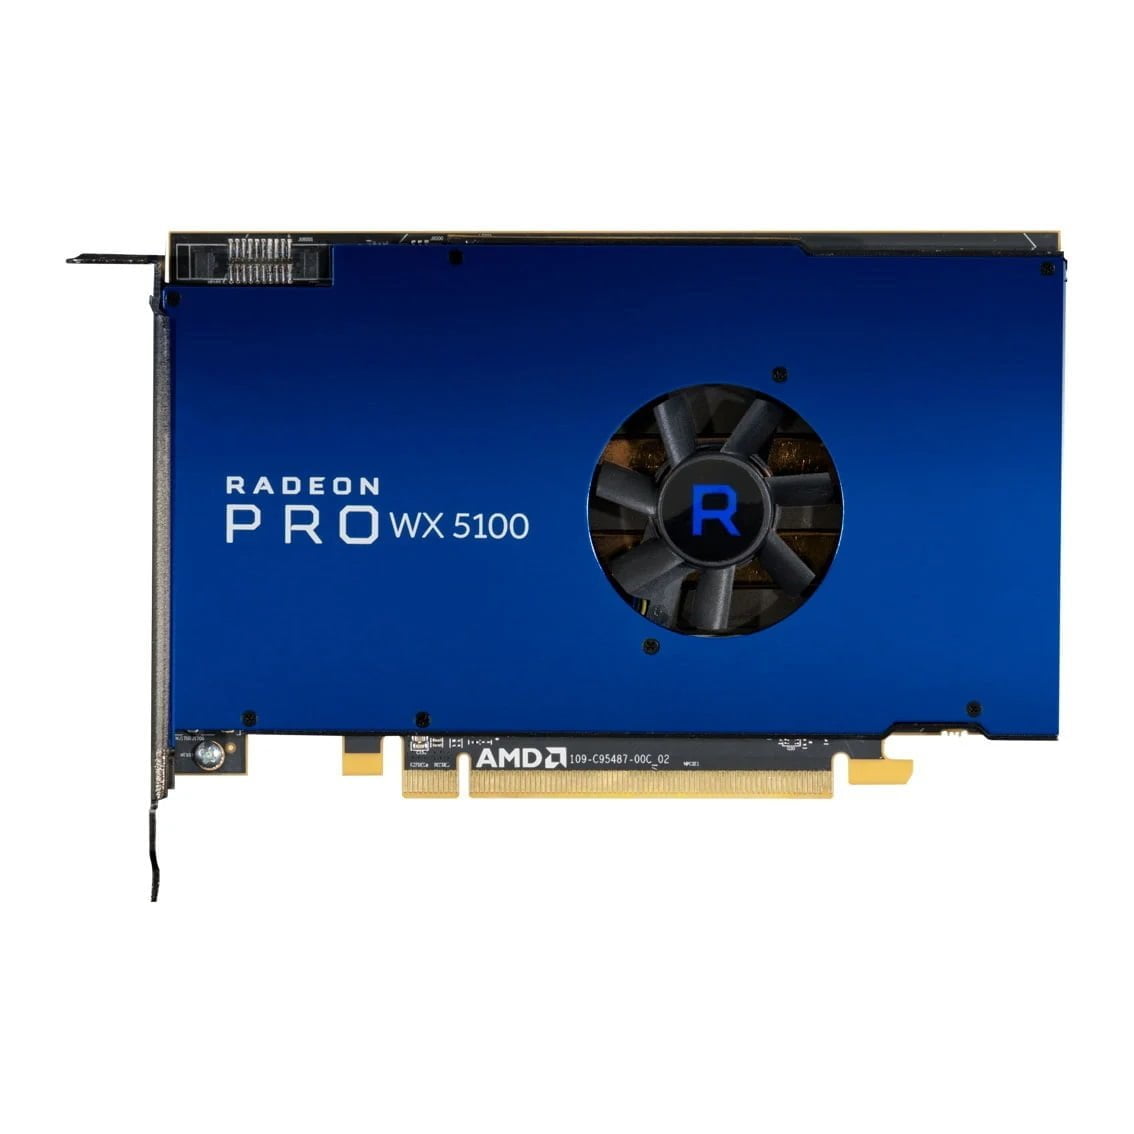 AMD Radeon Pro WX 5100 Front